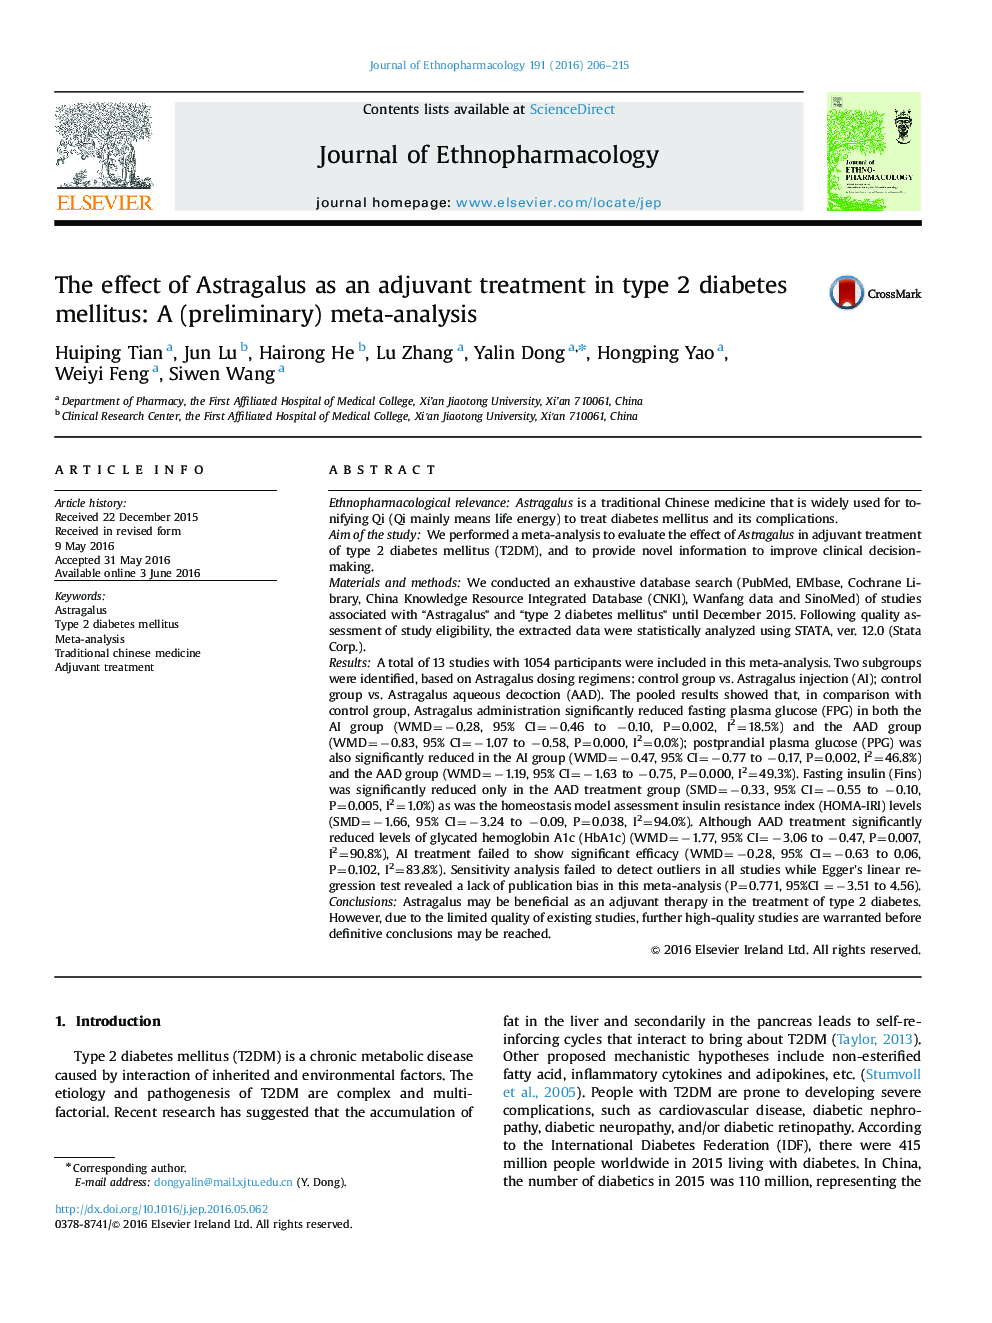 The effect of Astragalus as an adjuvant treatment in type 2 diabetes mellitus: A (preliminary) meta-analysis